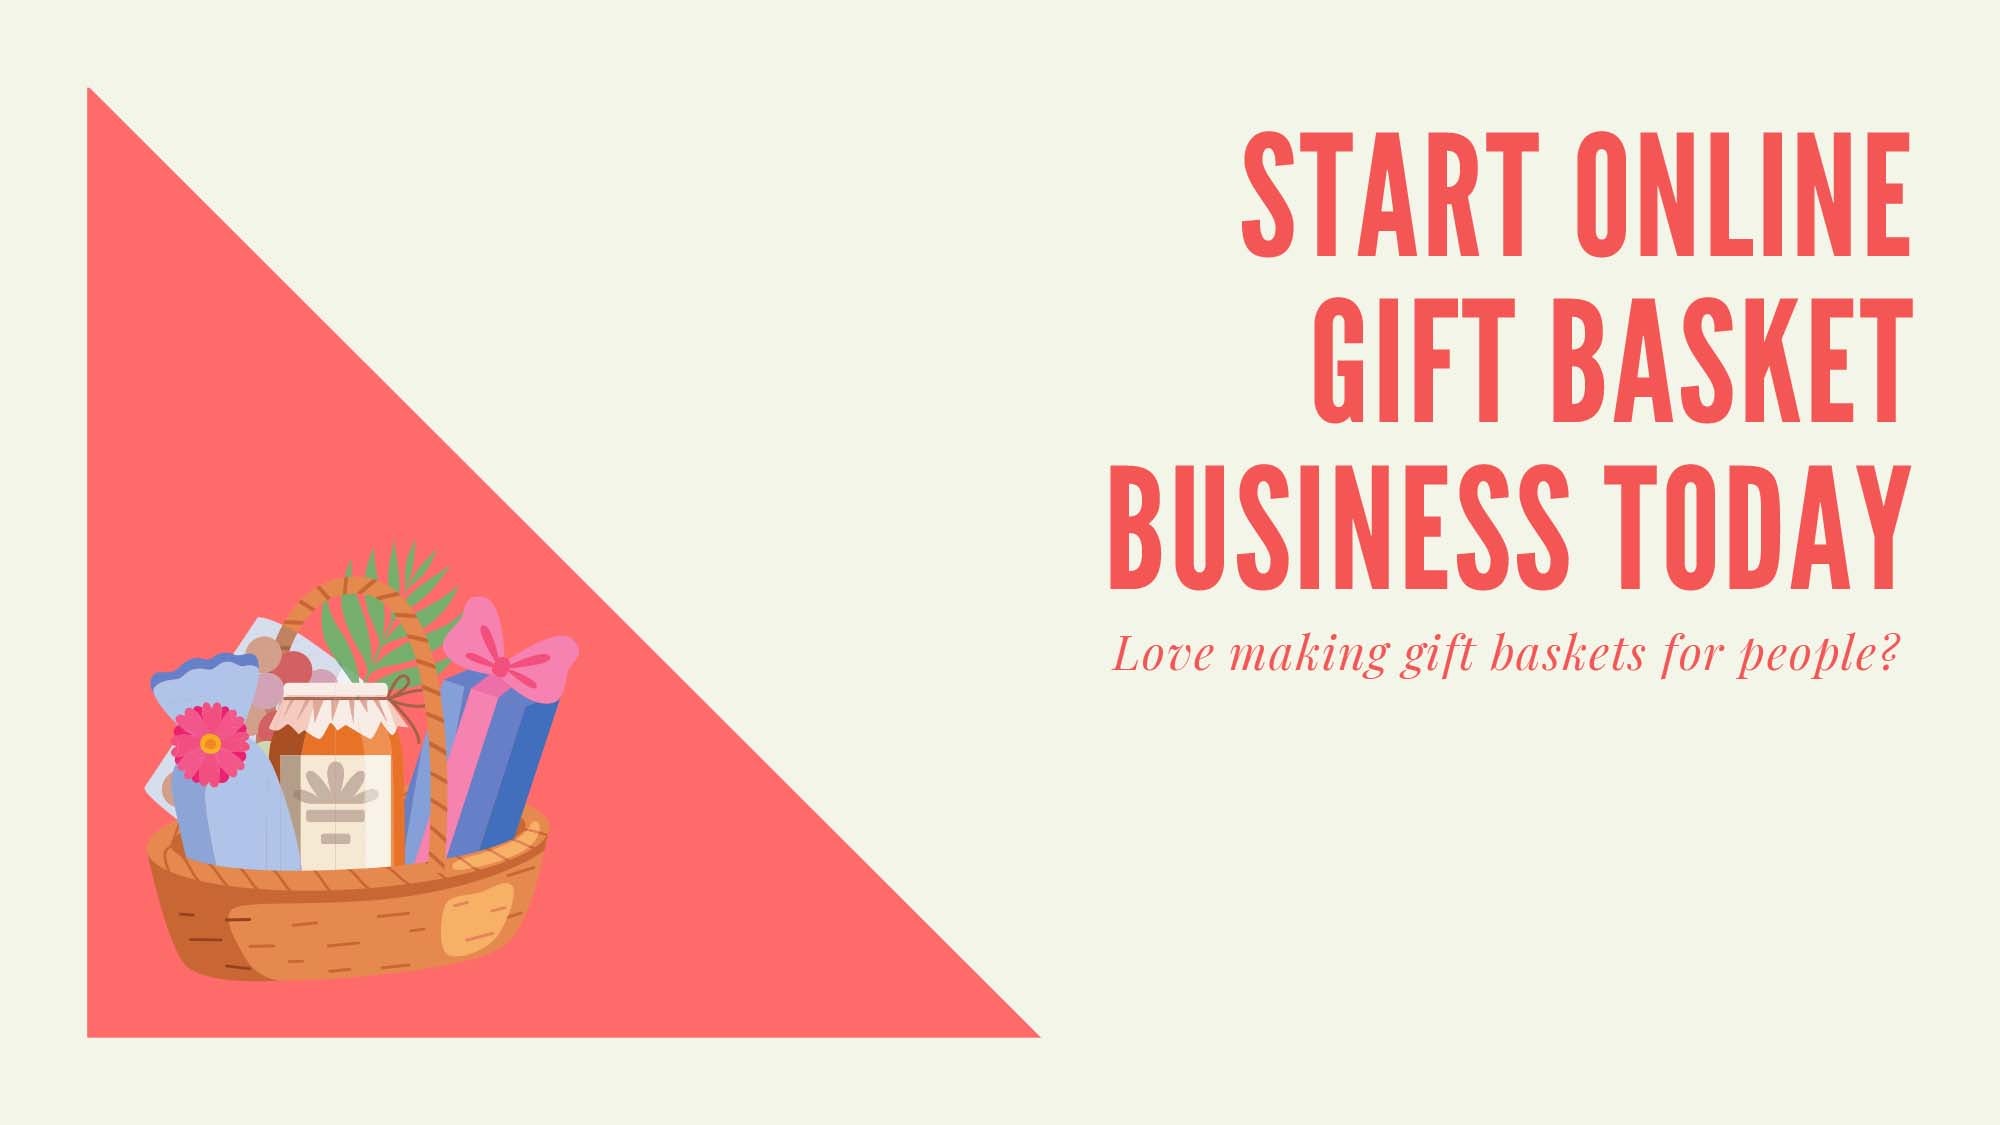 6 Steps of Starting An Online Gift Basket Business